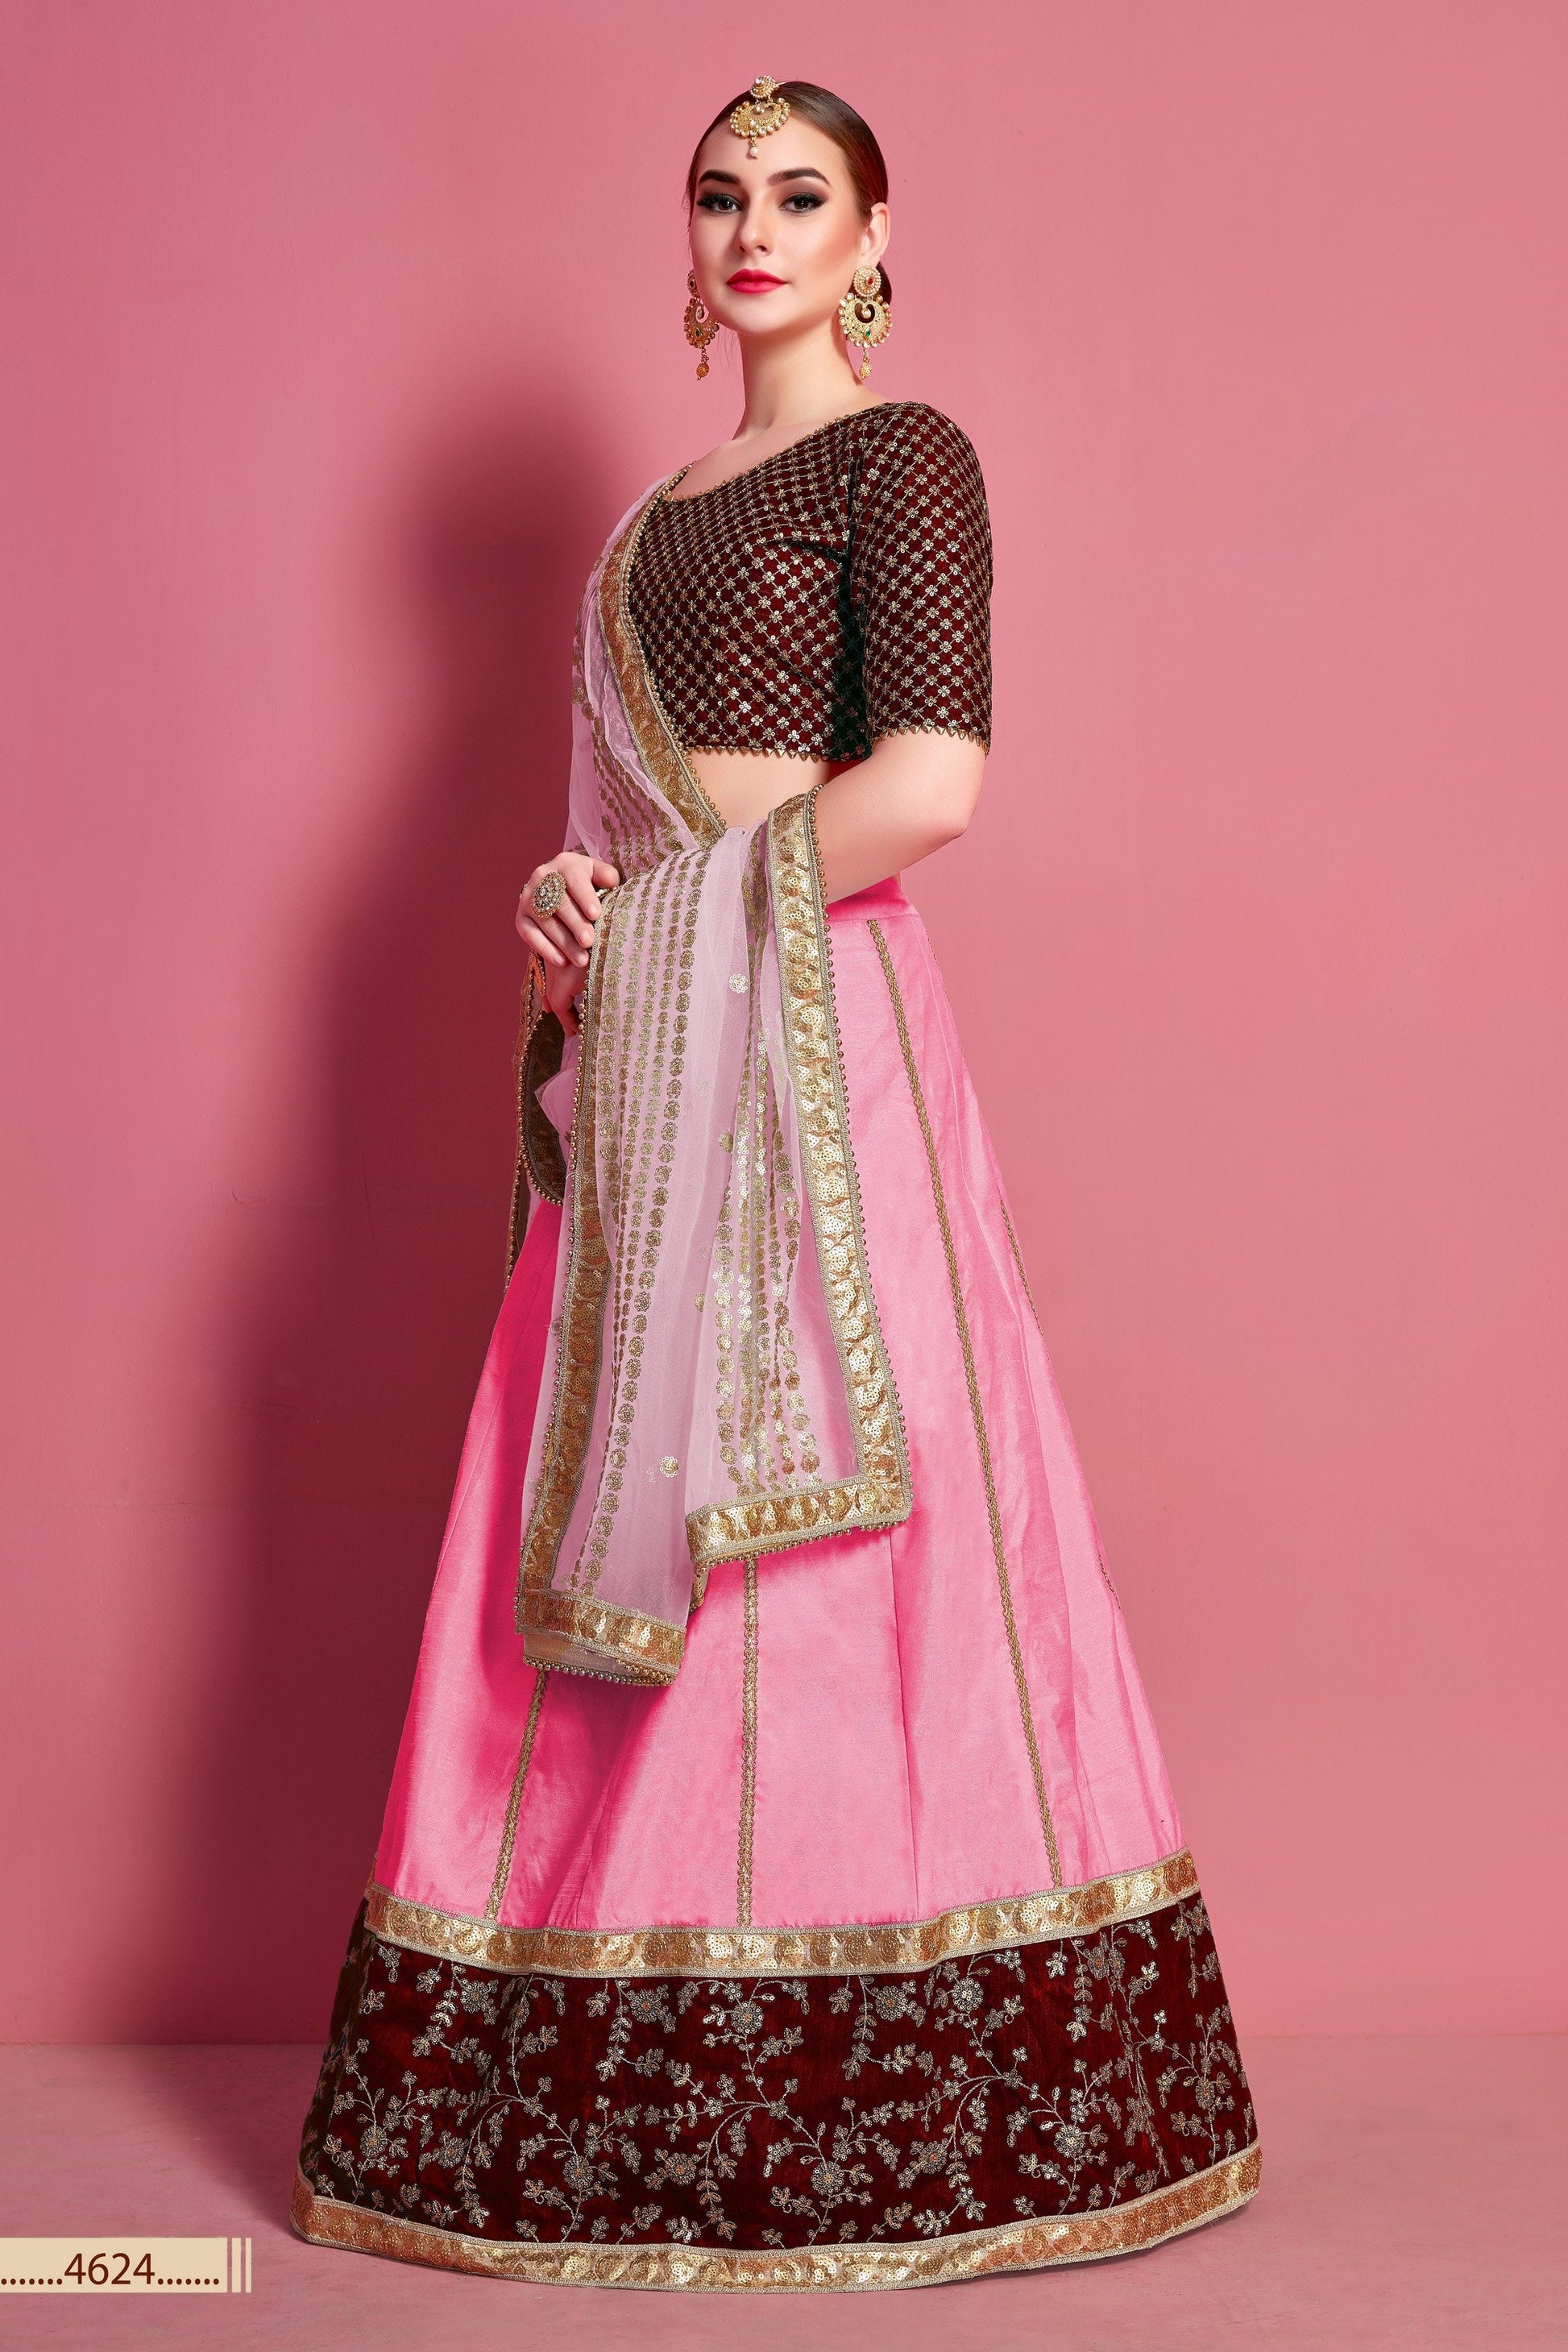 Baby Pink Pakistani Art Silk Lehenga Choli For Indian Festivals & Weddings - Embroidery Work,